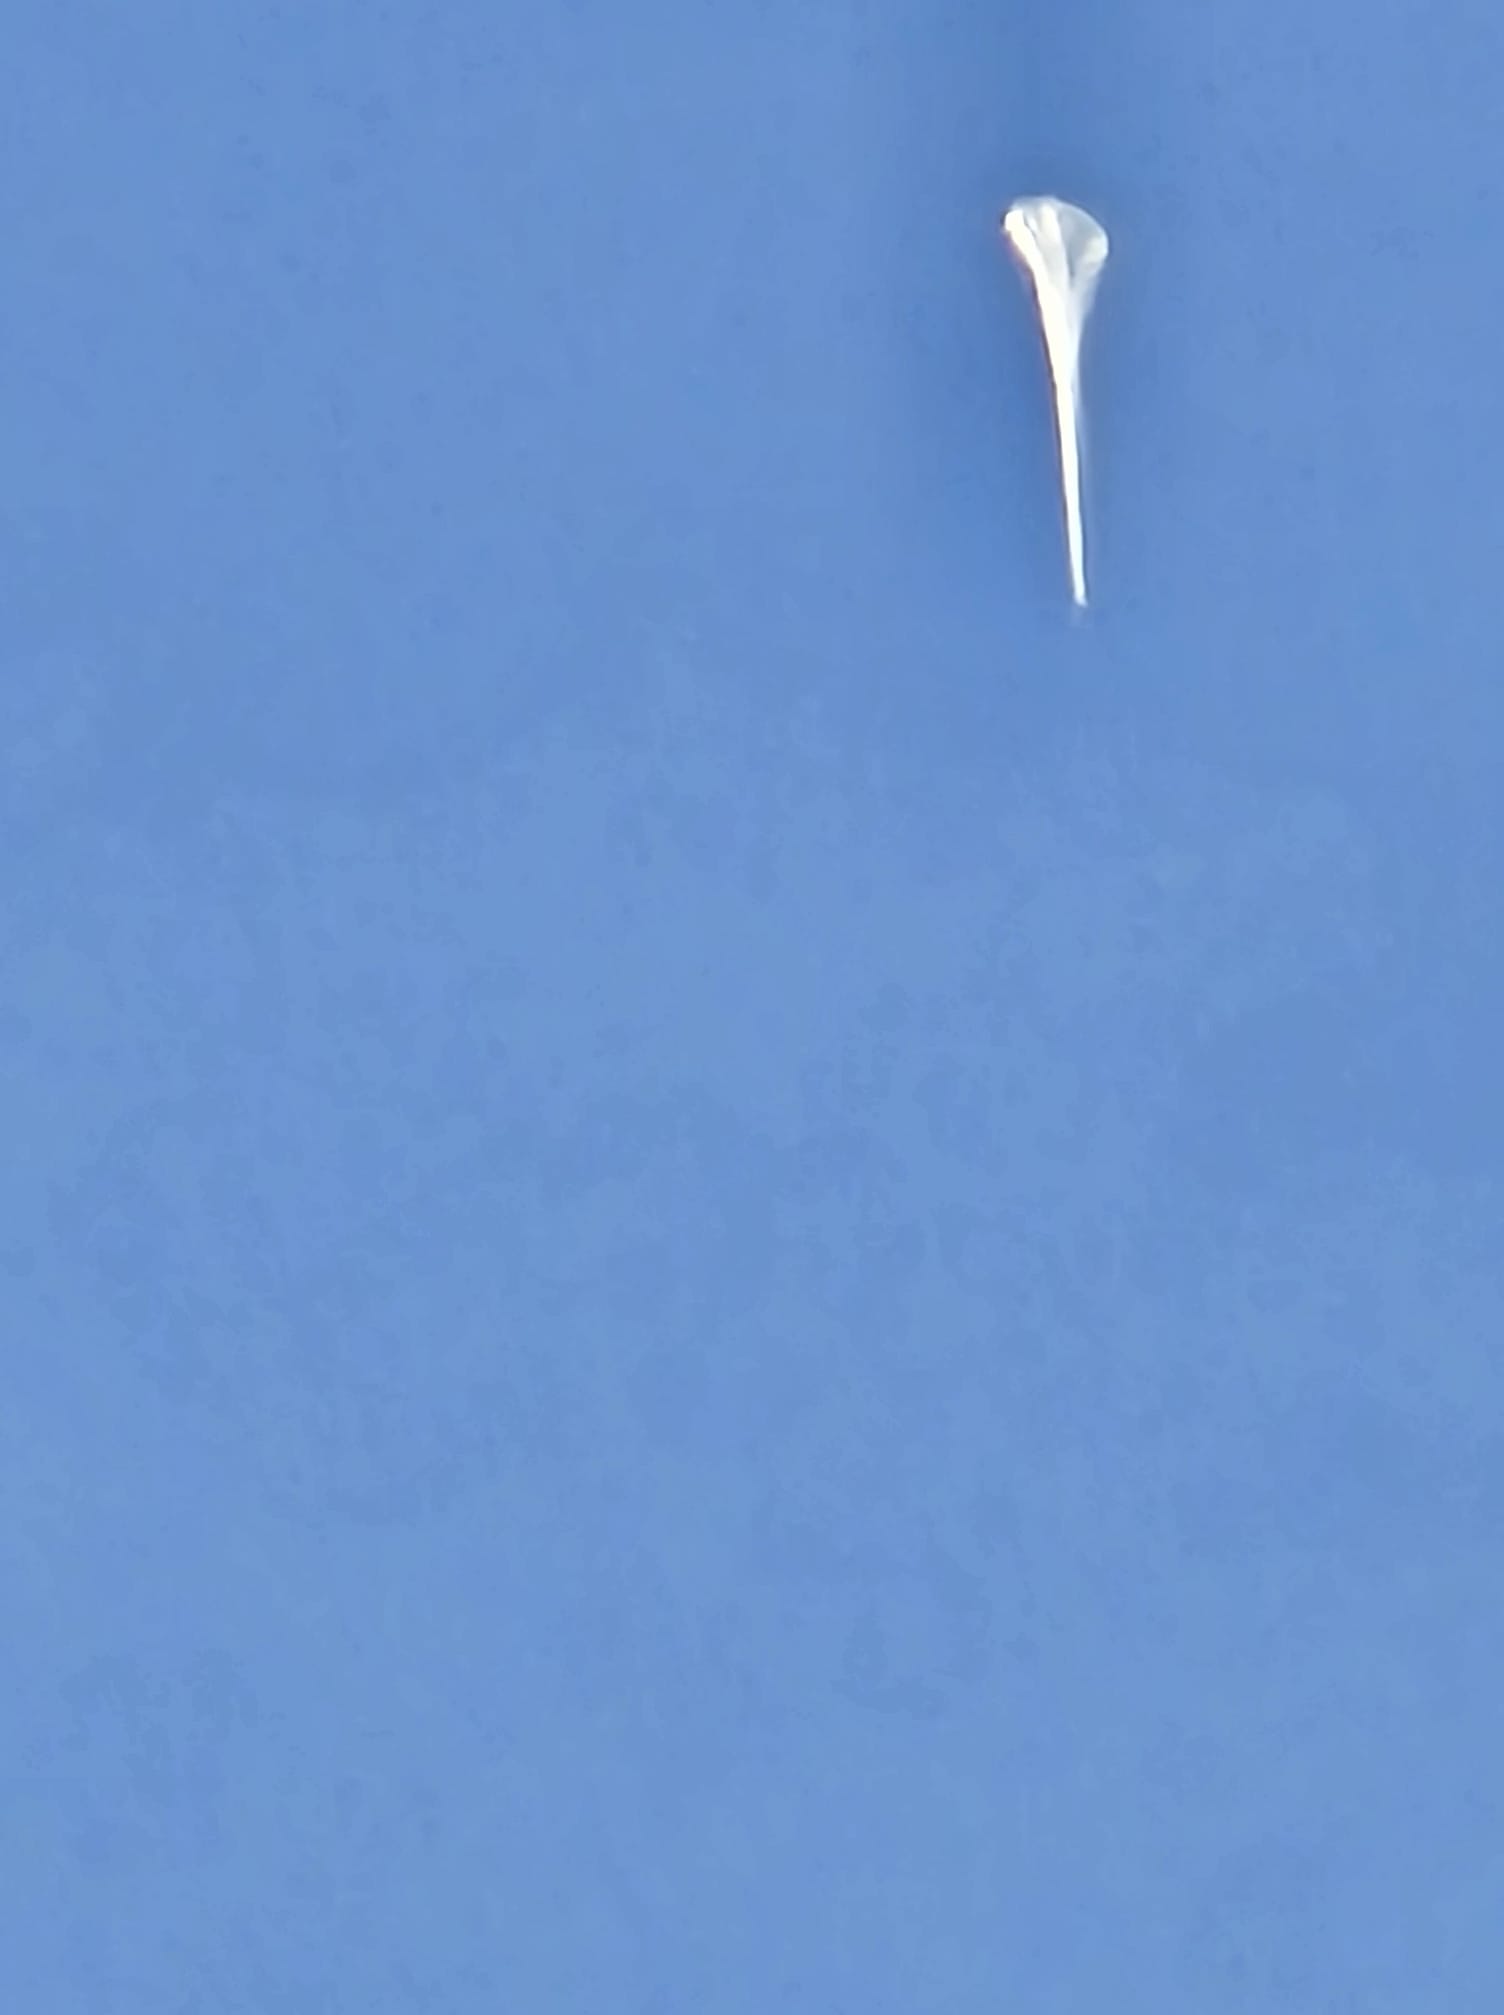 The balloon ascending above Tillamook (Image: Shane Stutzman)